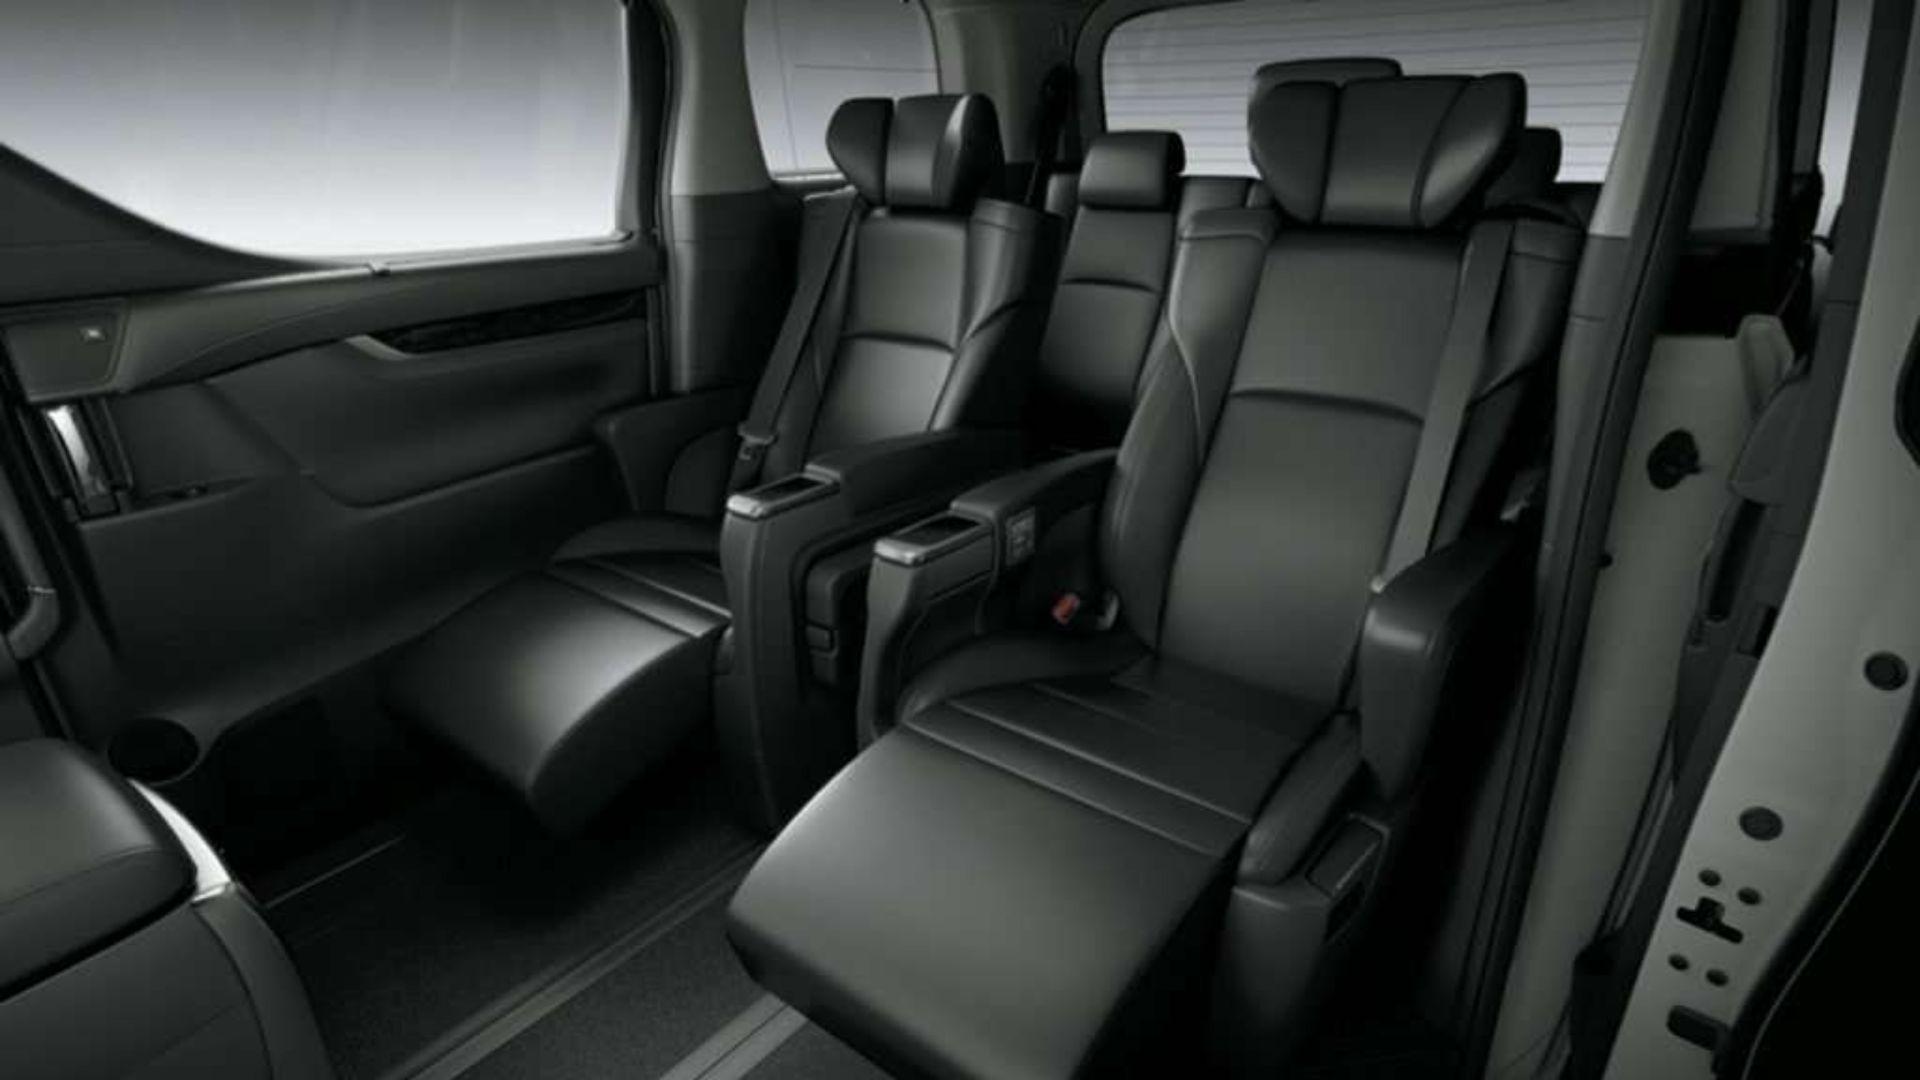 TRAC - LuxCar - Toyota Alphard - Interior 2.jpg